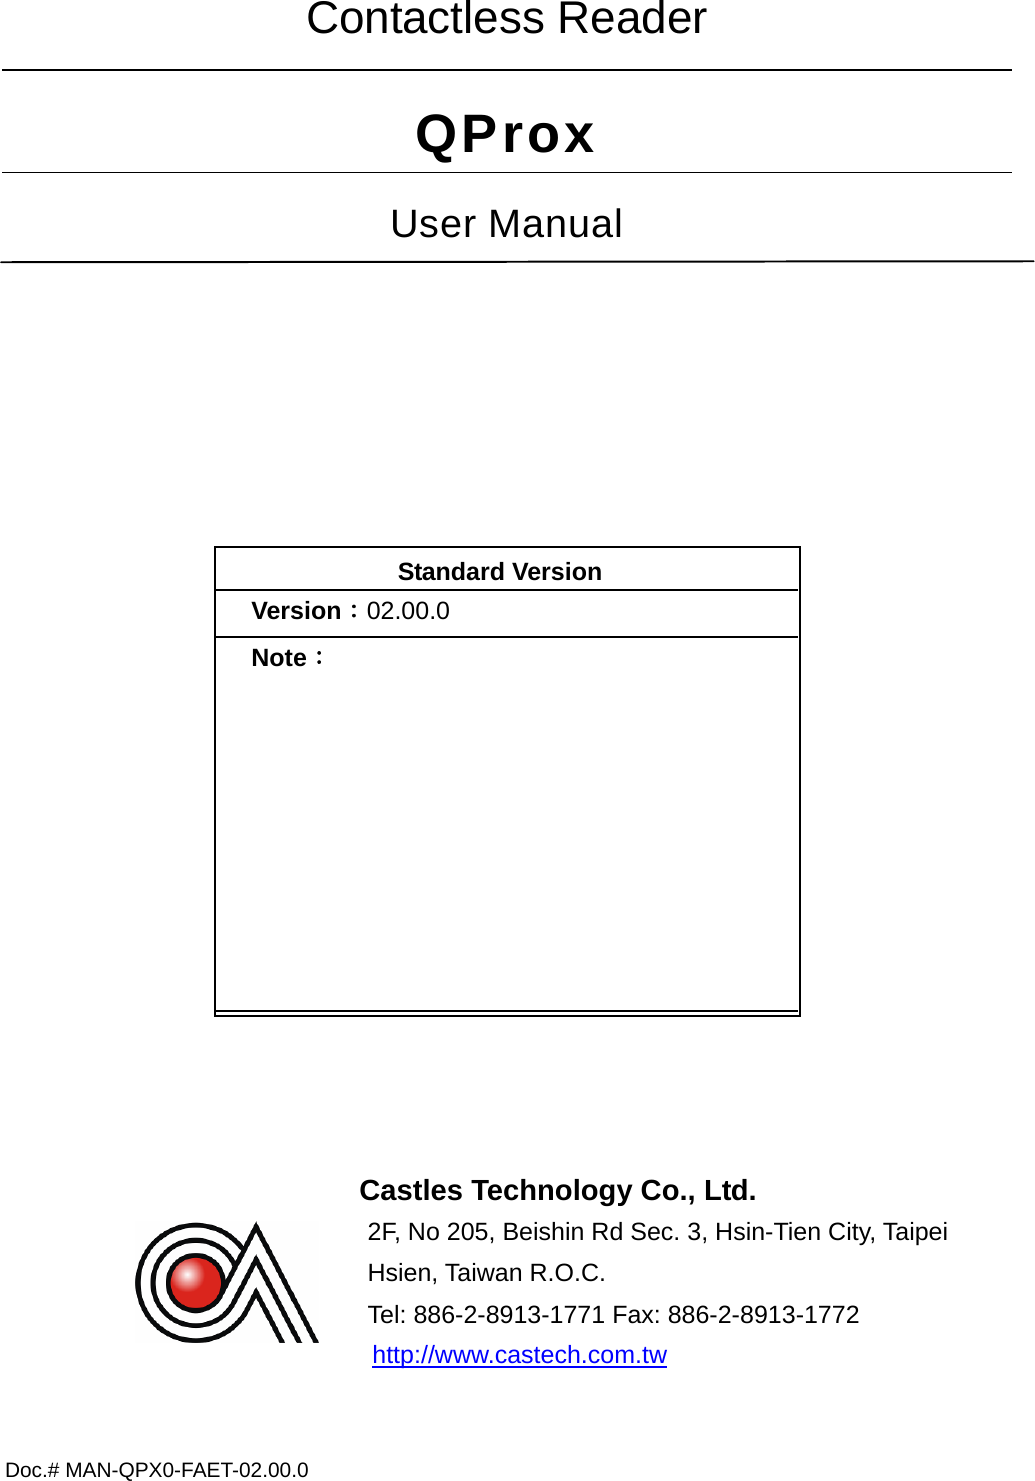 Doc.# MAN-QPX0-FAET-02.00.0     Contactless Reader QProx User Manual   Standard Version Version：02.00.0 Note：    Castles Technology Co., Ltd. 2F, No 205, Beishin Rd Sec. 3, Hsin-Tien City, Taipei             Hsien, Taiwan R.O.C. Tel: 886-2-8913-1771 Fax: 886-2-8913-1772  http://www.castech.com.tw  